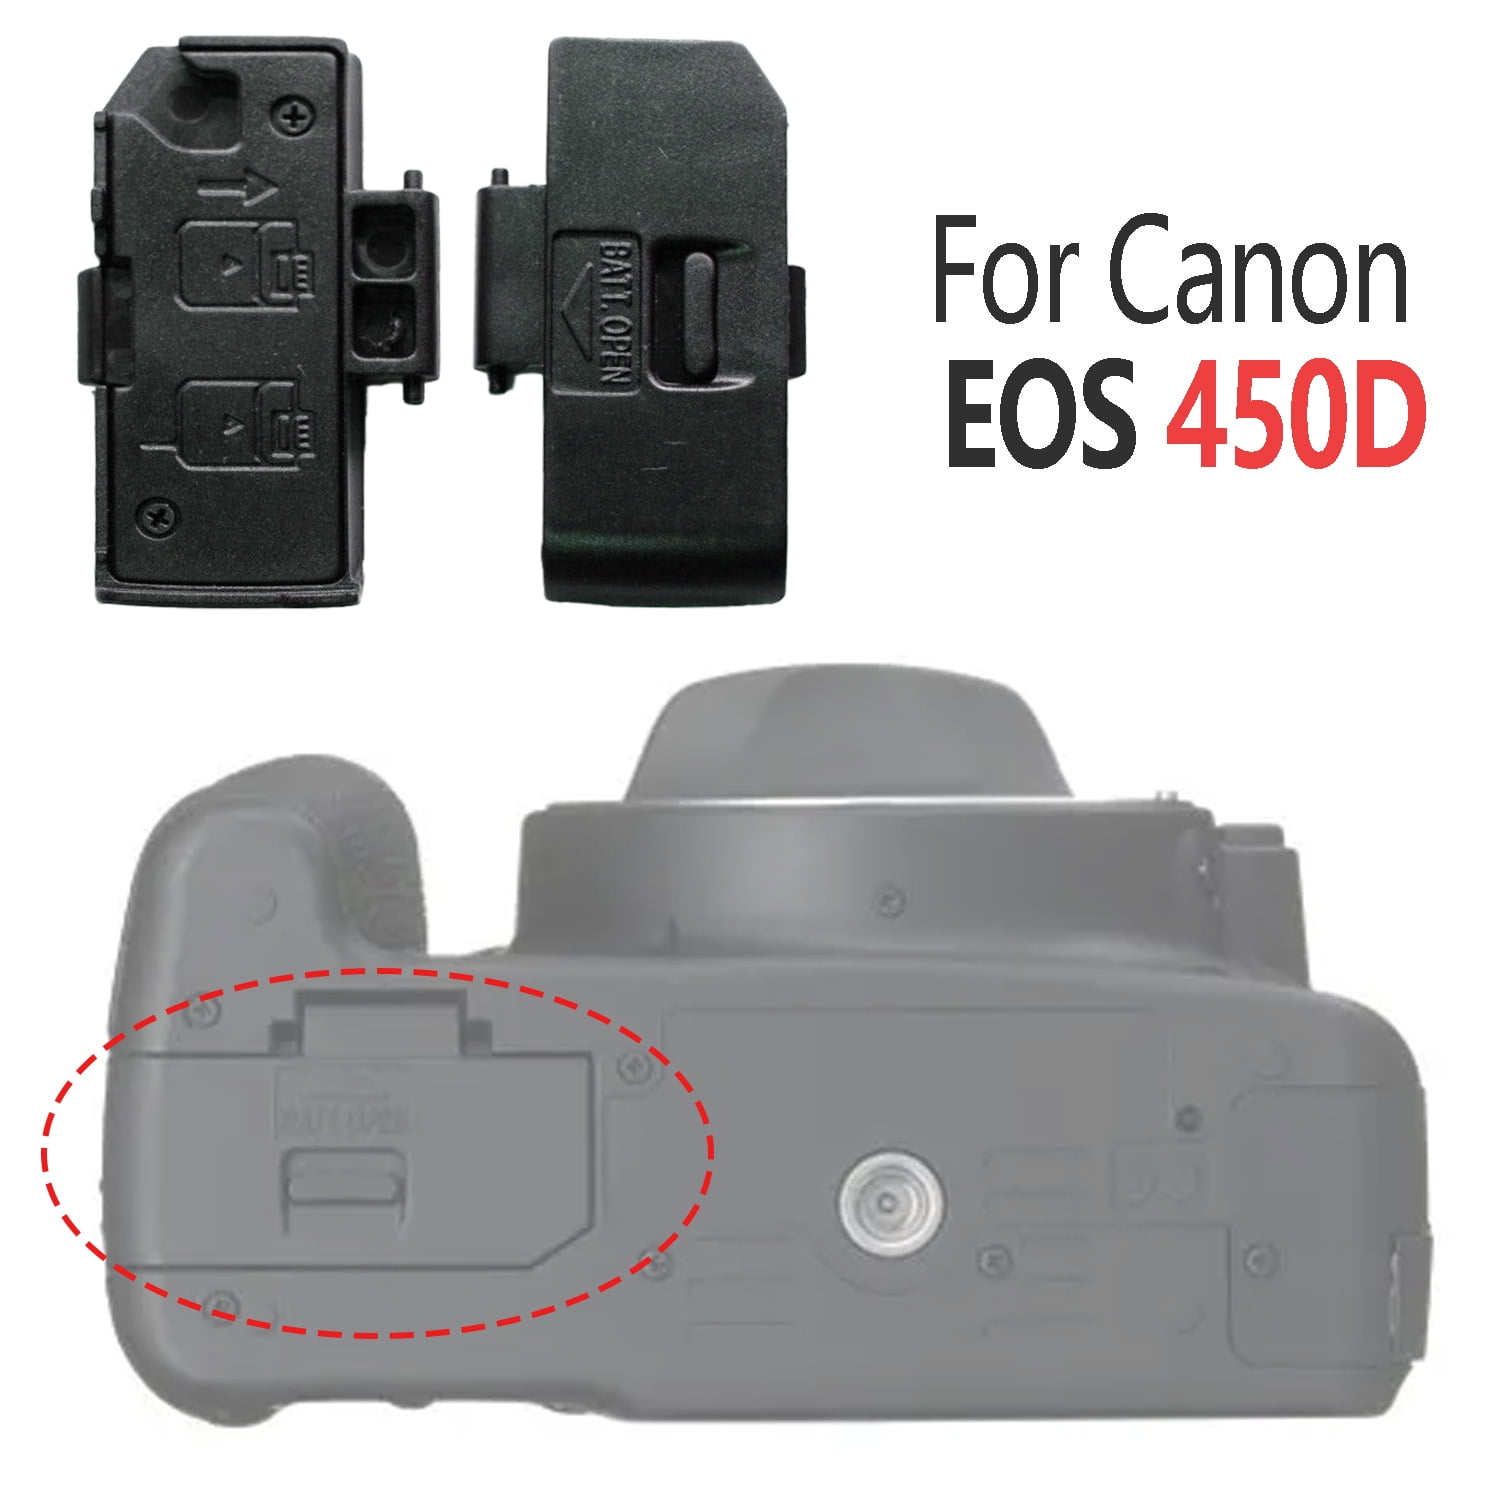 zo tand radicaal Canon EOS 450D Black Battery Door New Repair Part Replacement Accessory for  Digital-SLR Camera - Walmart.com